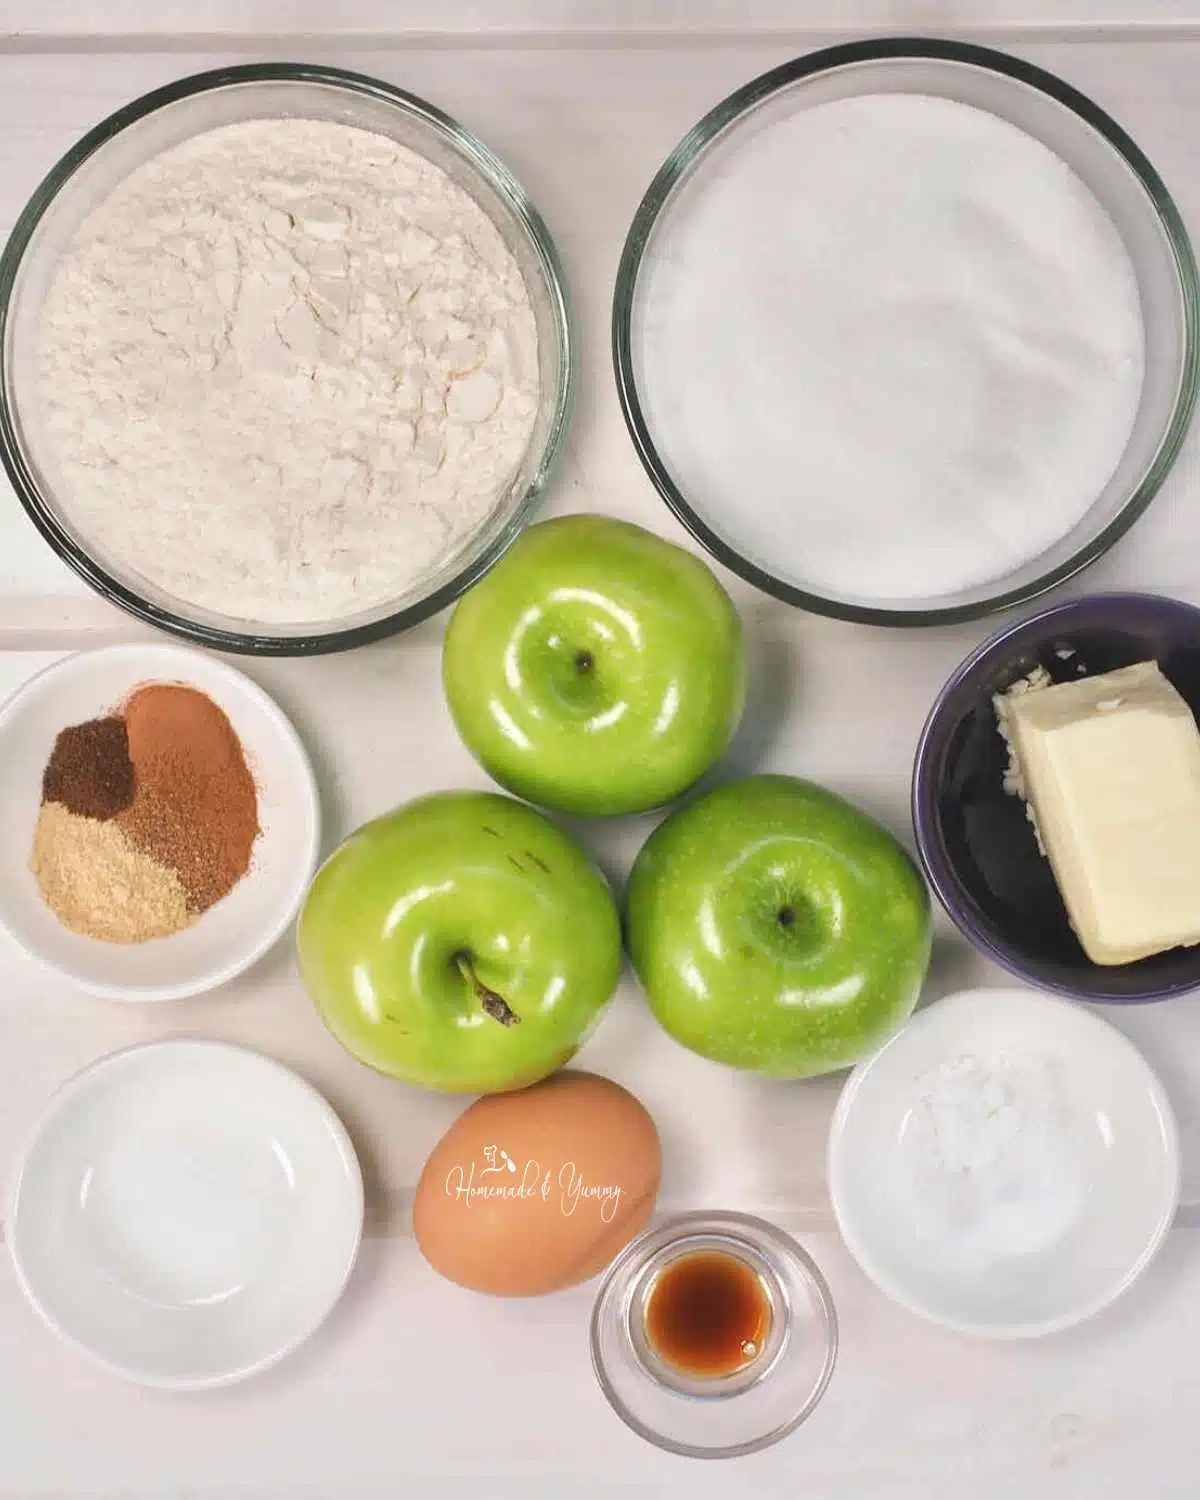 Ingredients to make baked apple dessert.